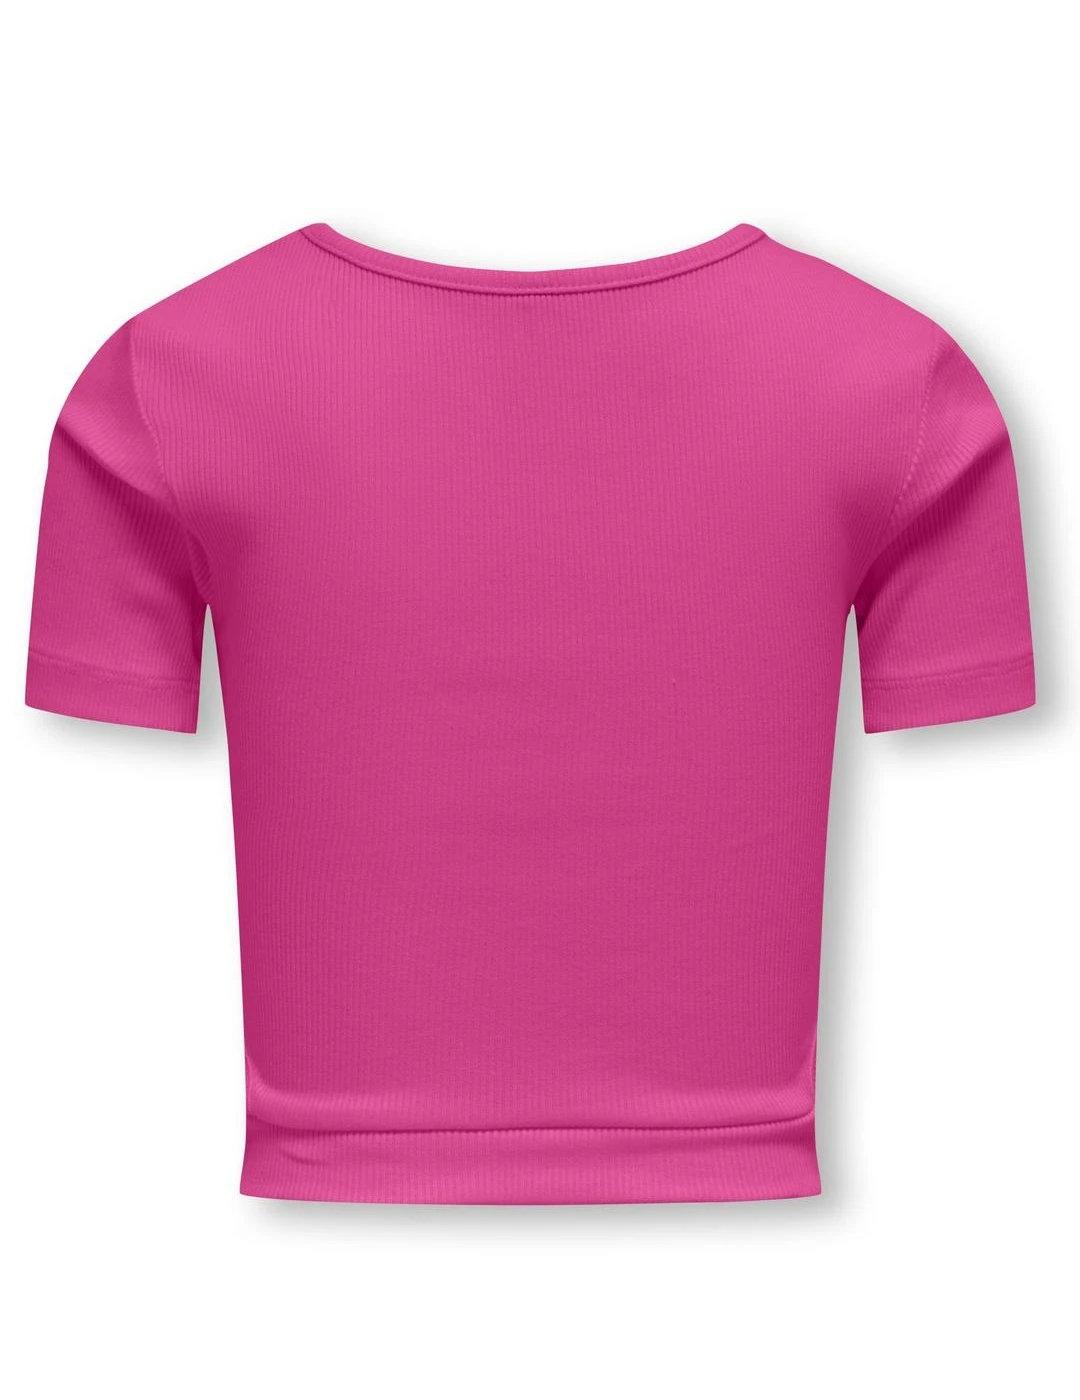 Camiseta Only Kids Nessa rosa manga corta para niña